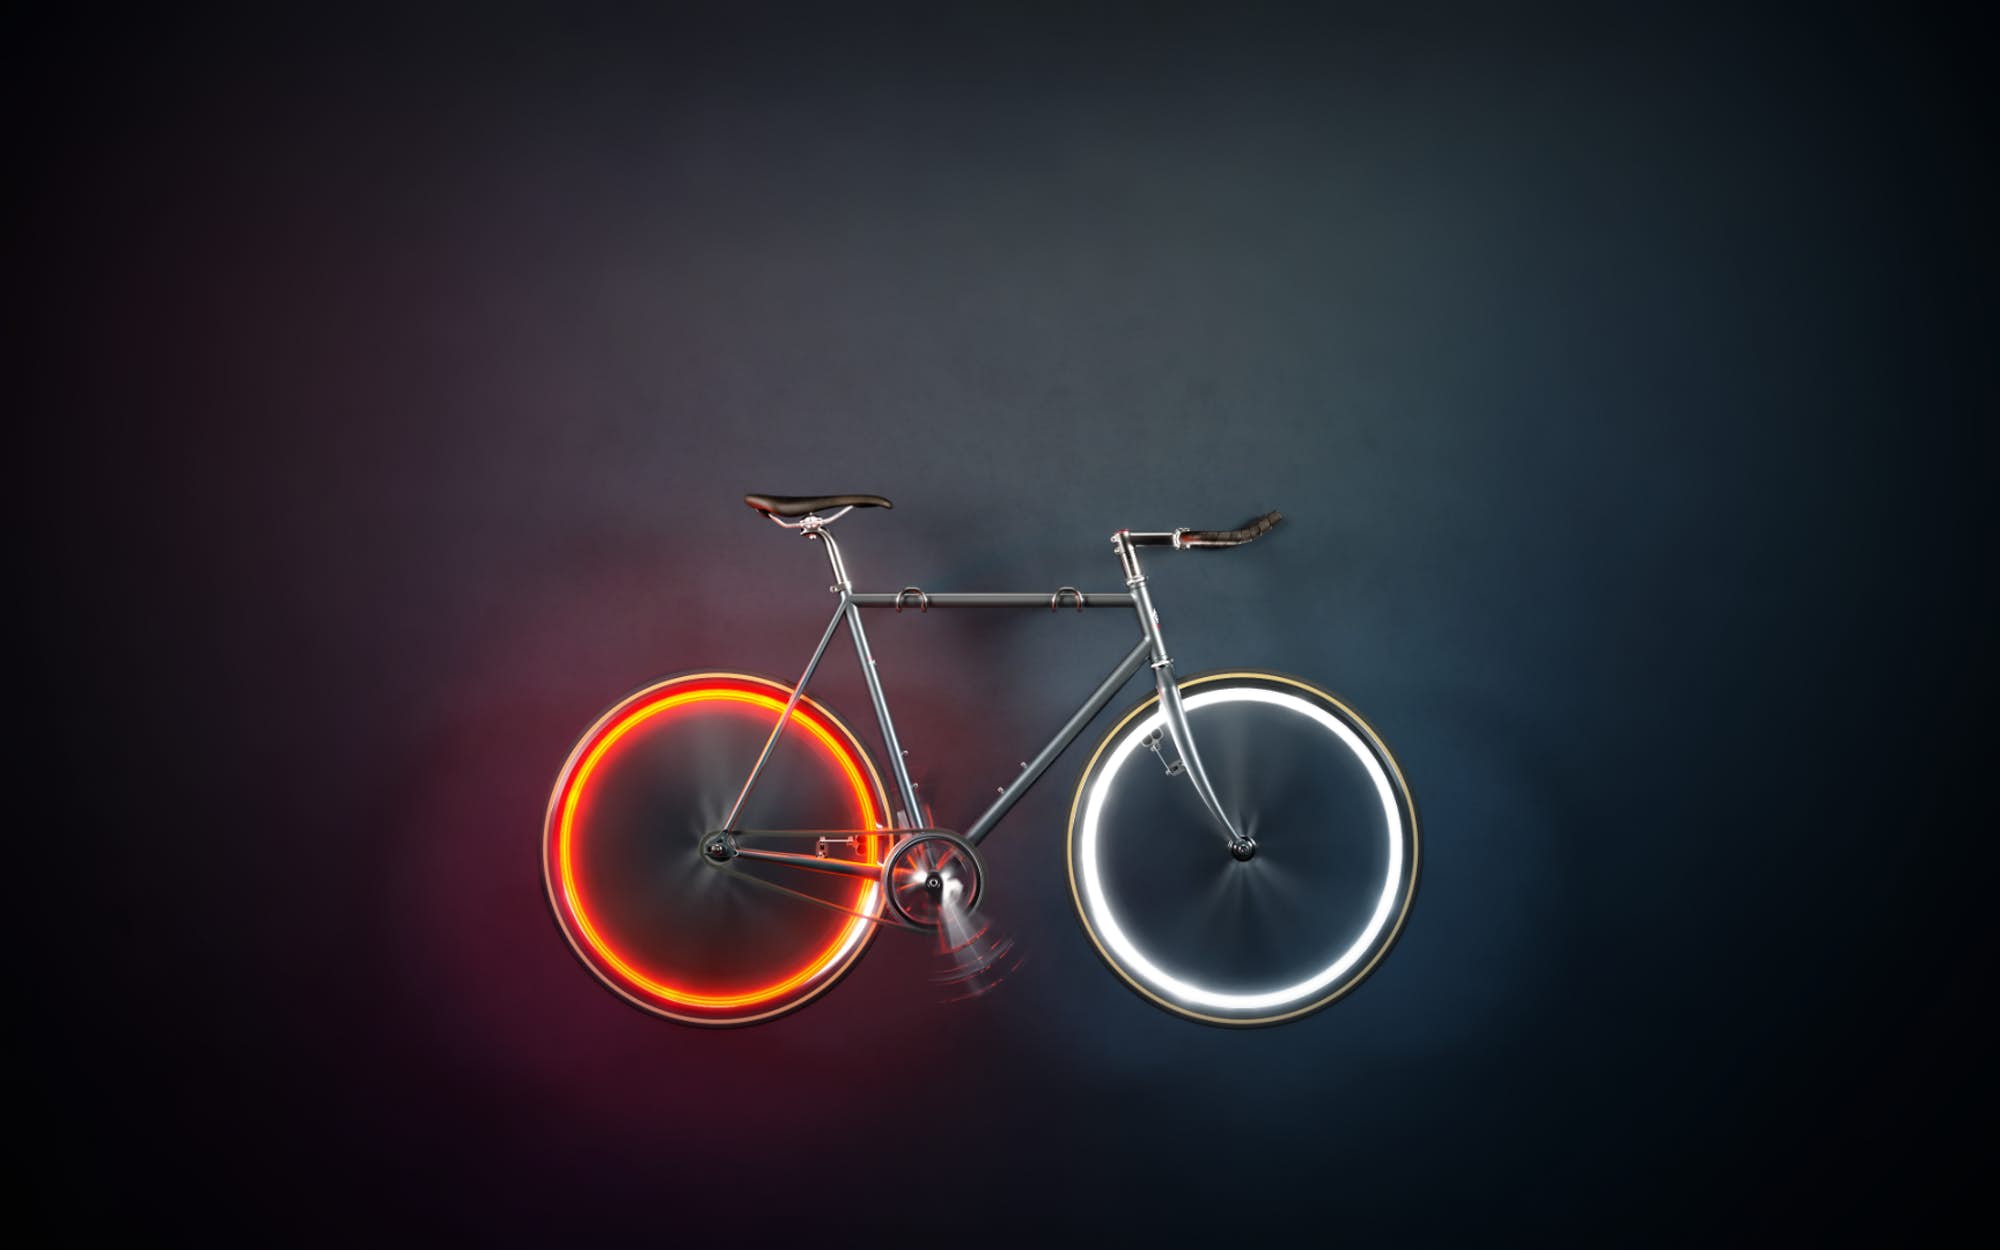 arara-bike-wheel-lights-3.jpeg